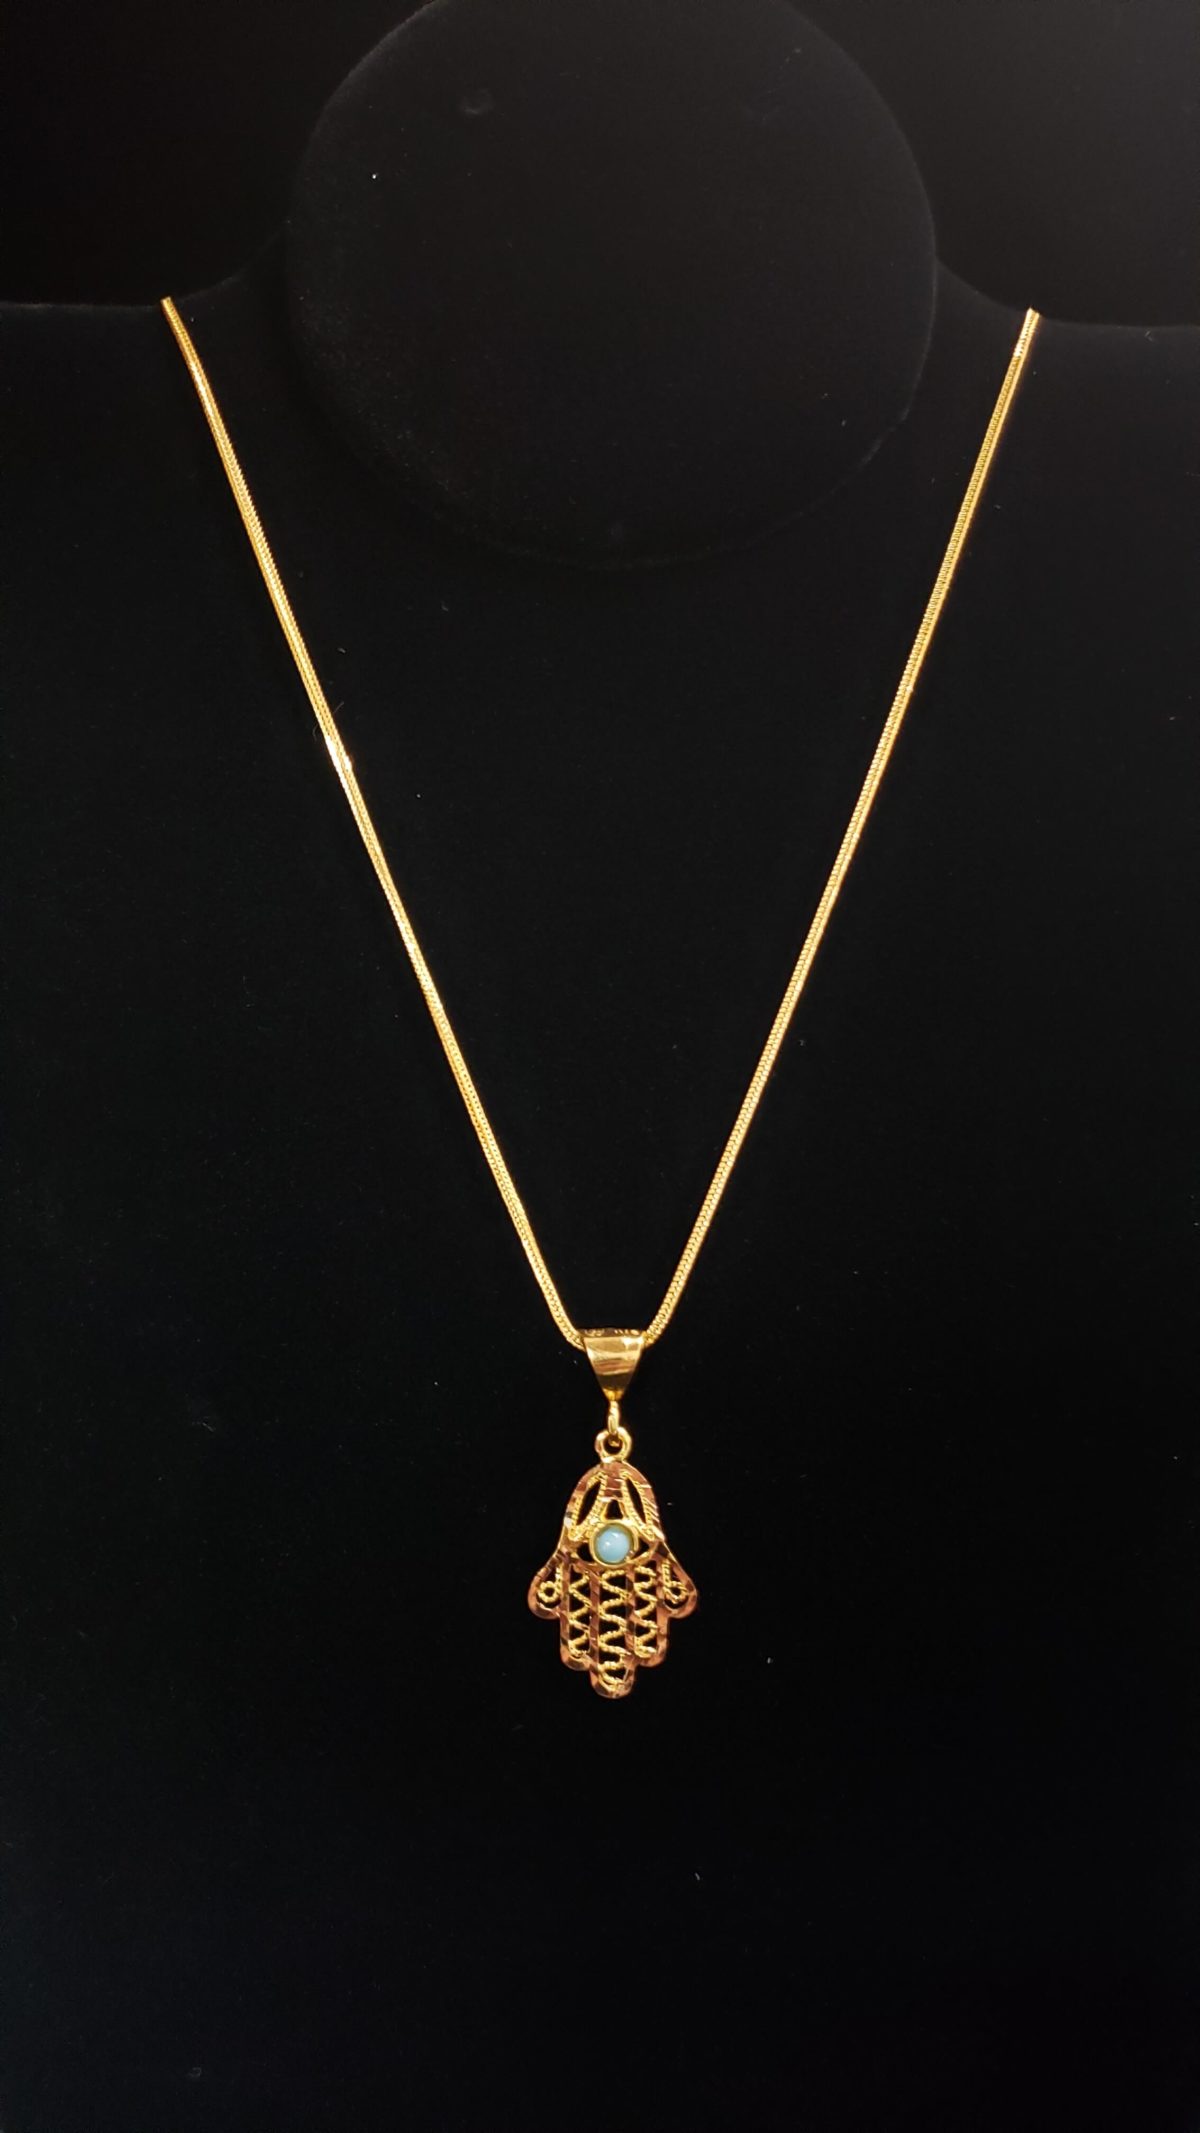 Leena's-Gold-Chain-with-Pendant